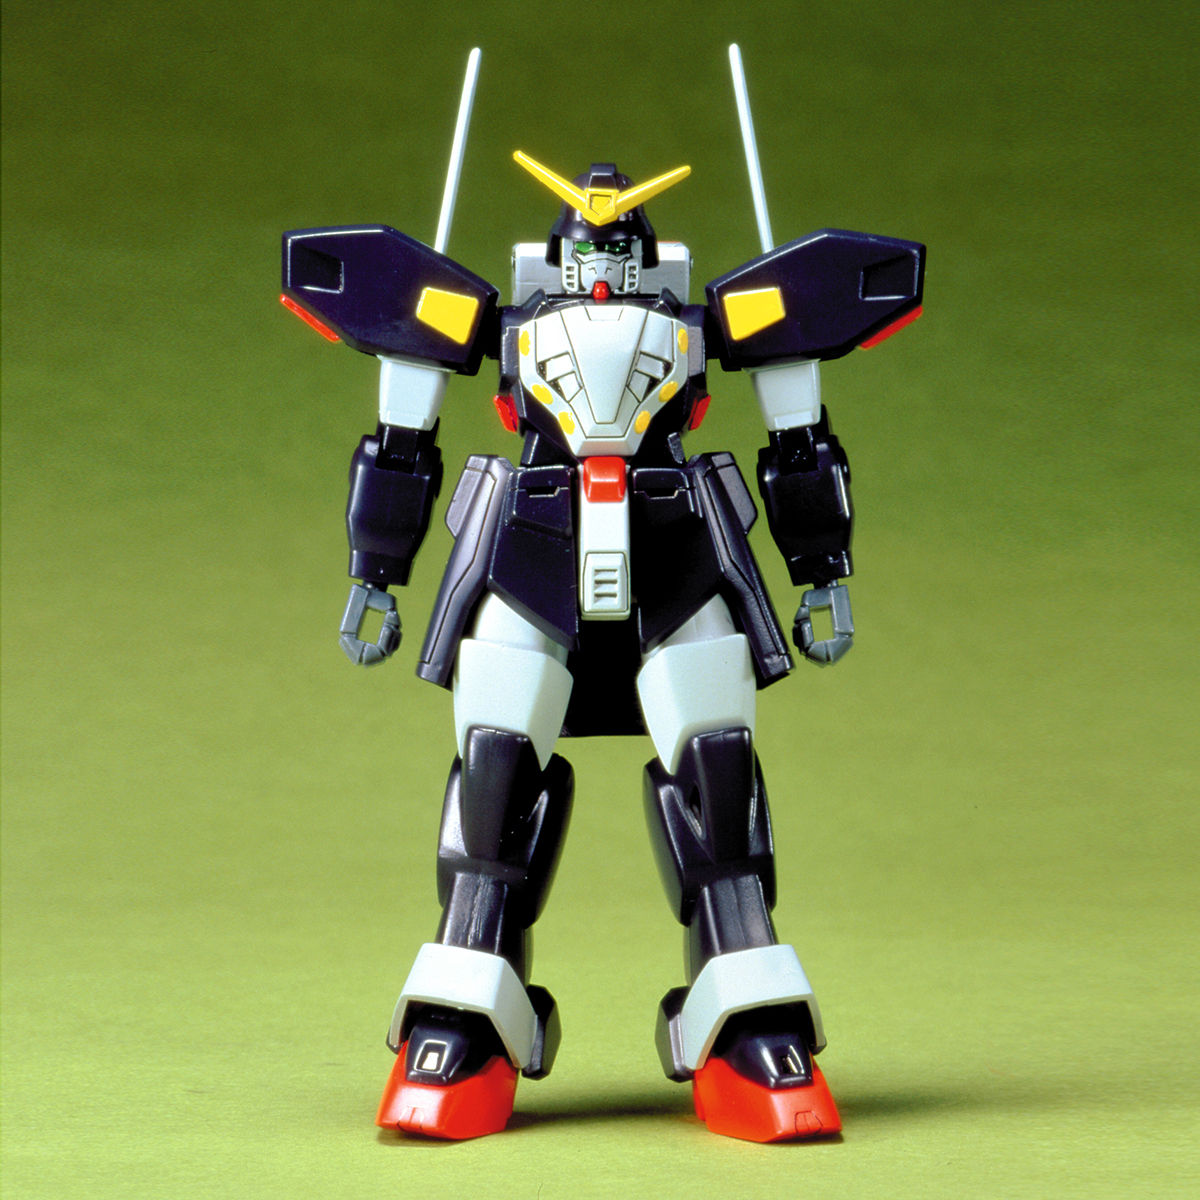 NG 1/144 Gundam Spiegel